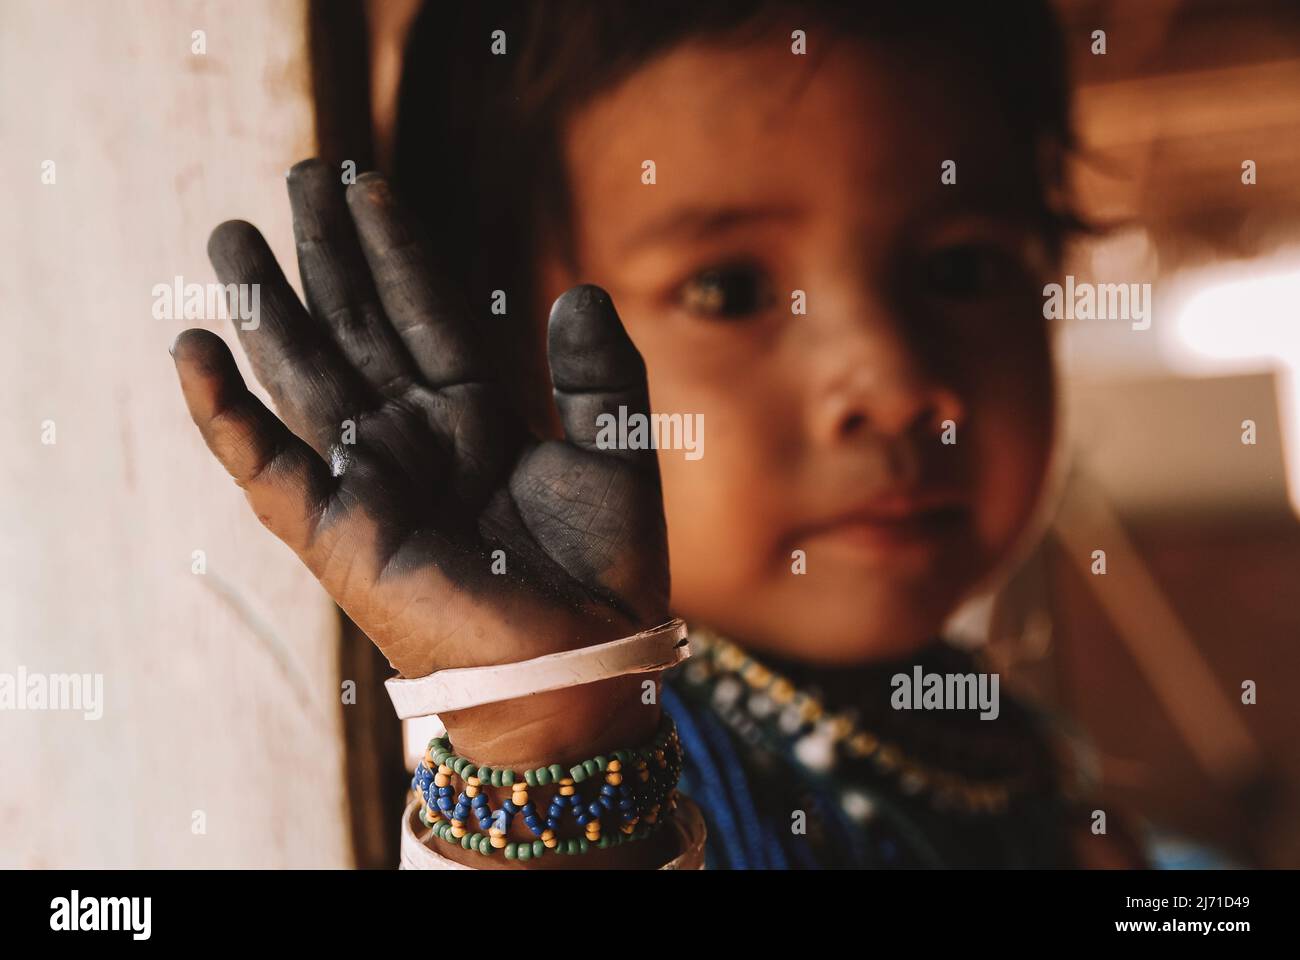 Indian child from the Asurini tribe in the Brazilian Amazon, Xingu River. 2007. Stock Photo